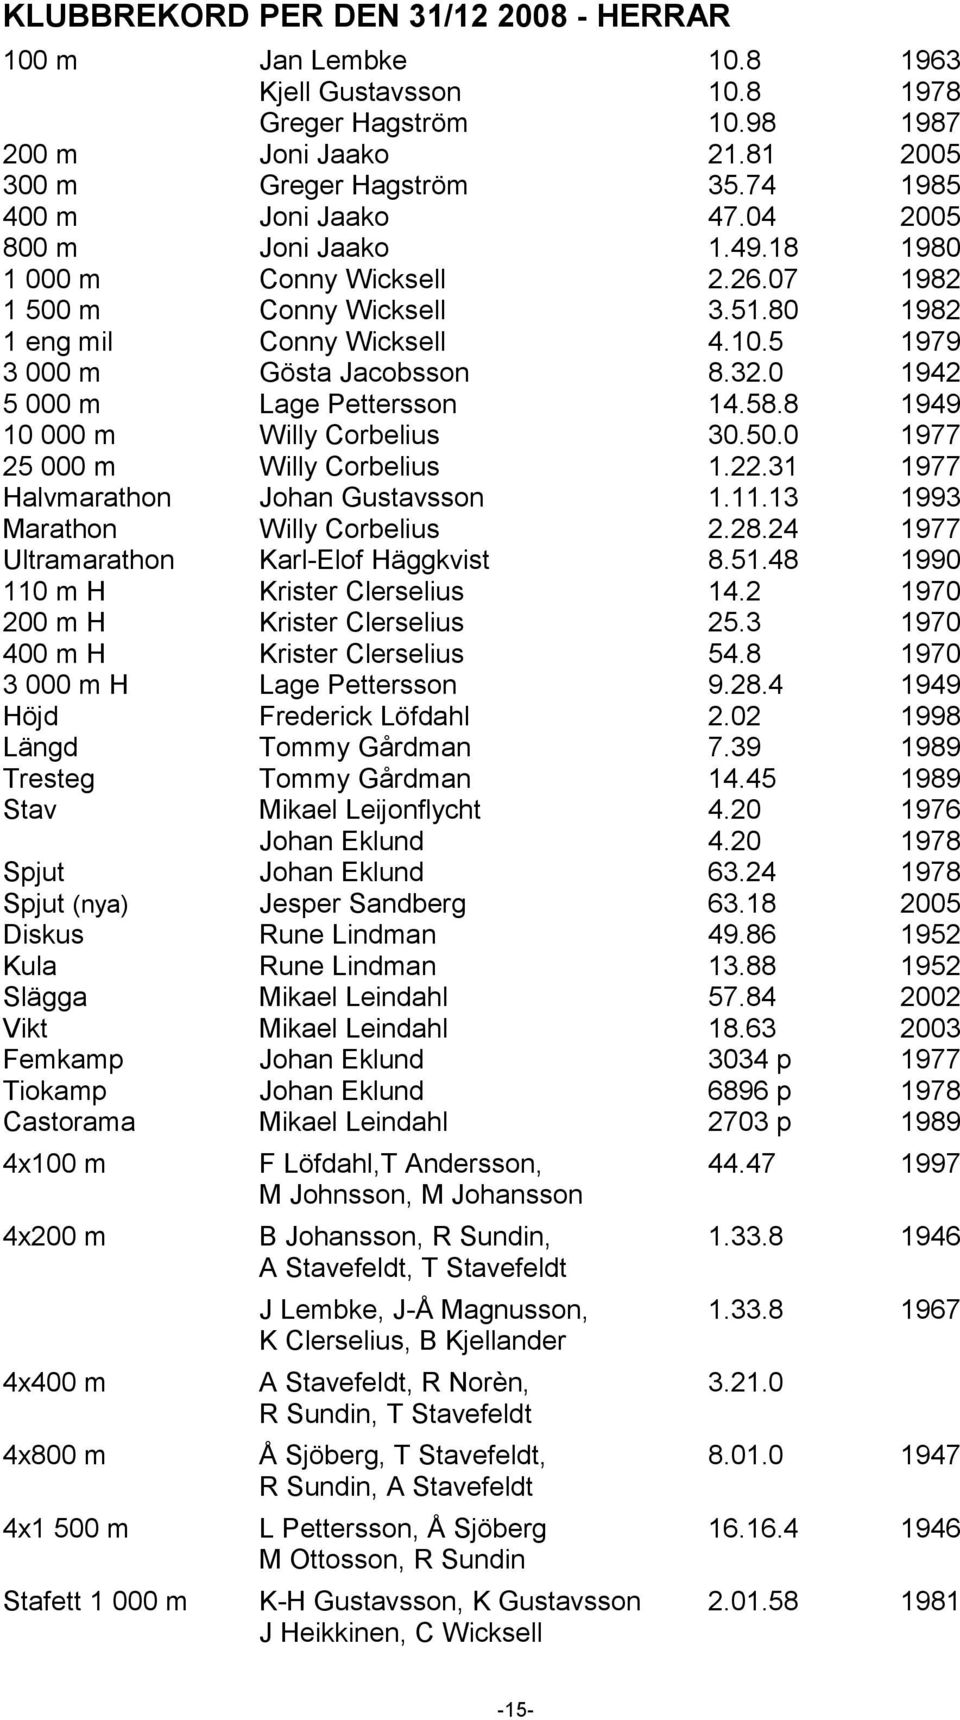 5 1979 3 000 m Gösta Jacobsson 8.32.0 1942 5 000 m Lage Pettersson 14.58.8 1949 10 000 m Willy Corbelius 30.50.0 1977 25 000 m Willy Corbelius 1.22.31 1977 Halvmarathon Johan Gustavsson 1.11.